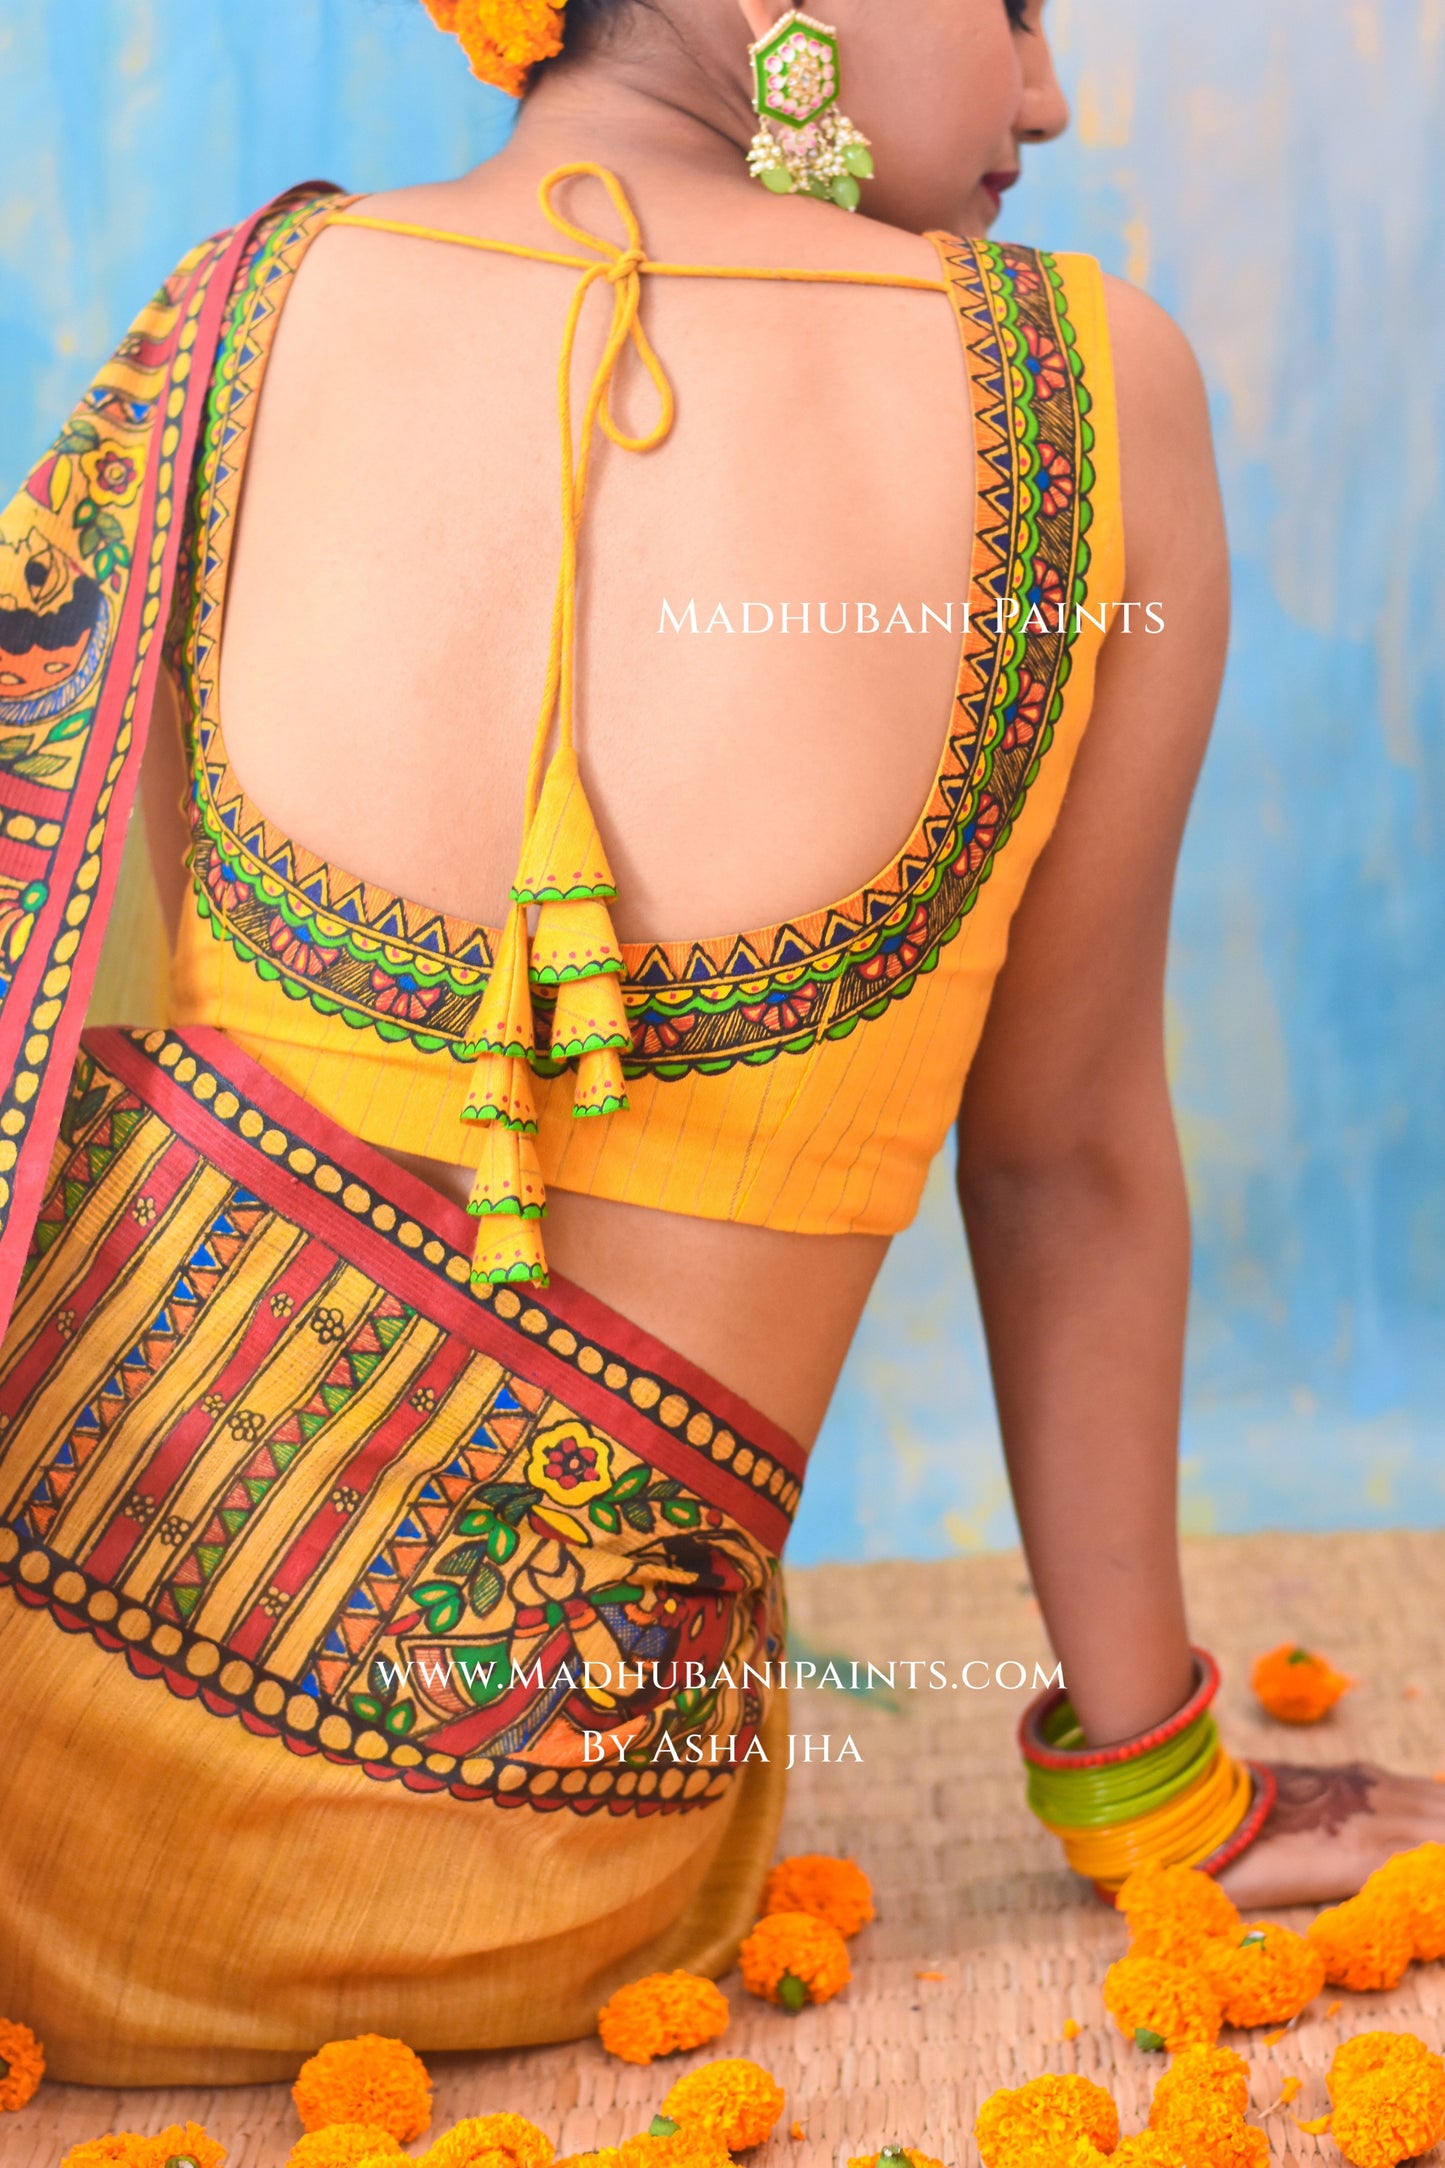 KAMESHWARI Madhubani Hand-painted Chanderi Silk Saree Blouse Set